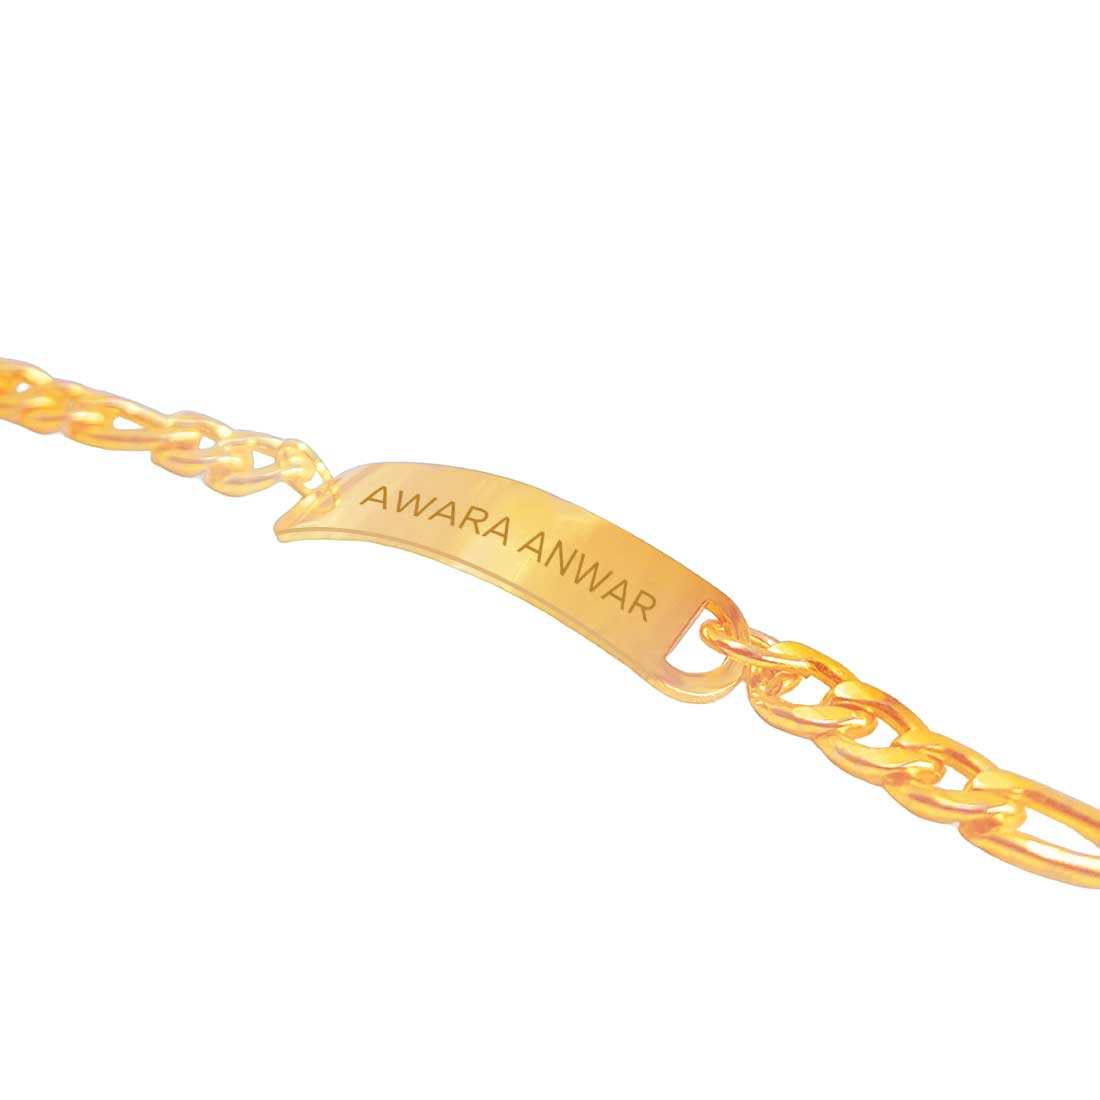 Personalized Engraved Bracelets - MYKA